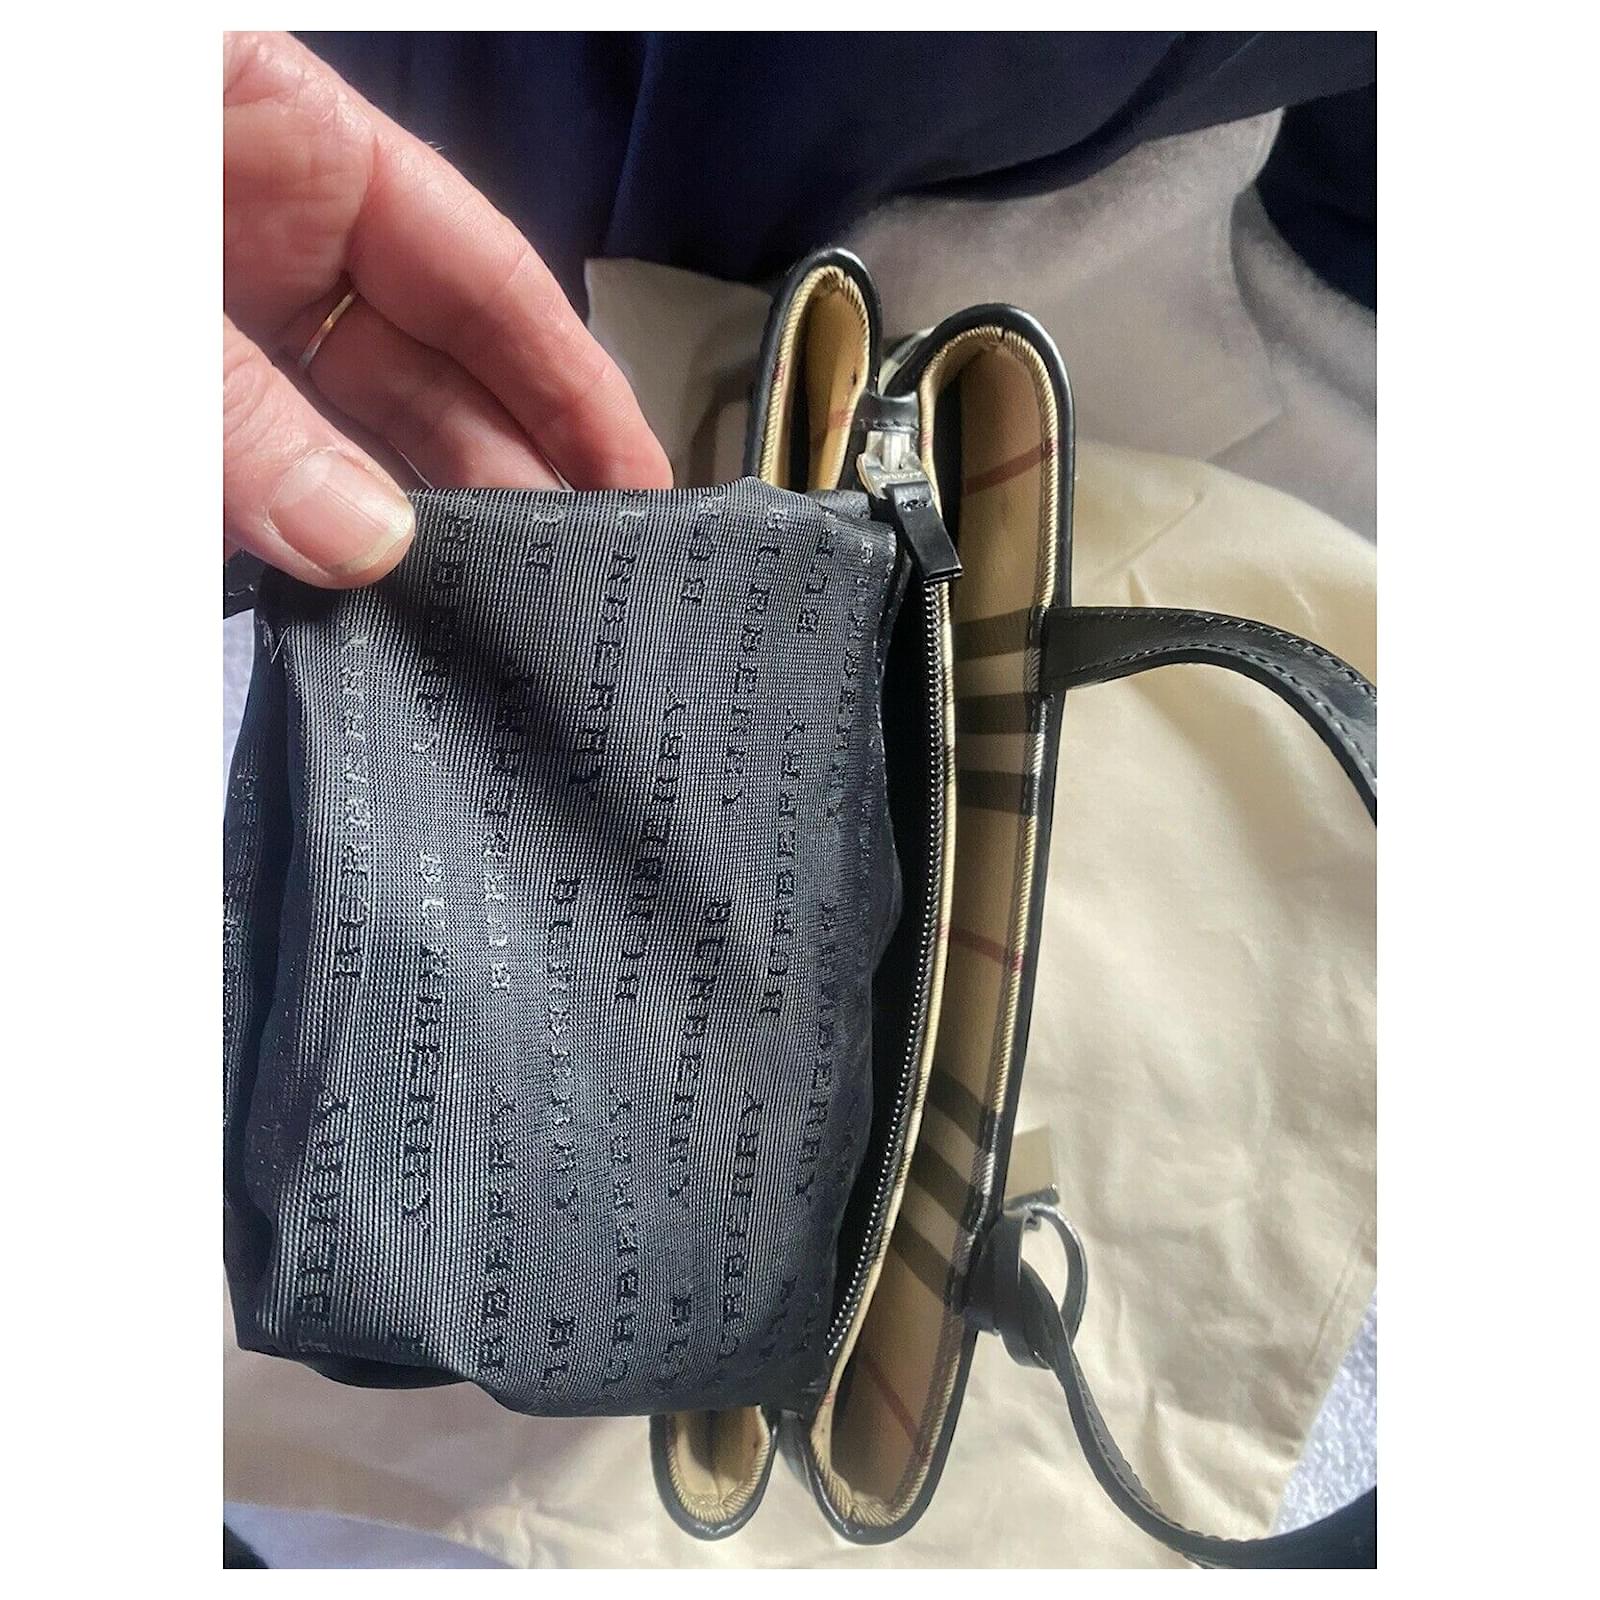 Additional pix of Authentic Burberry handbag